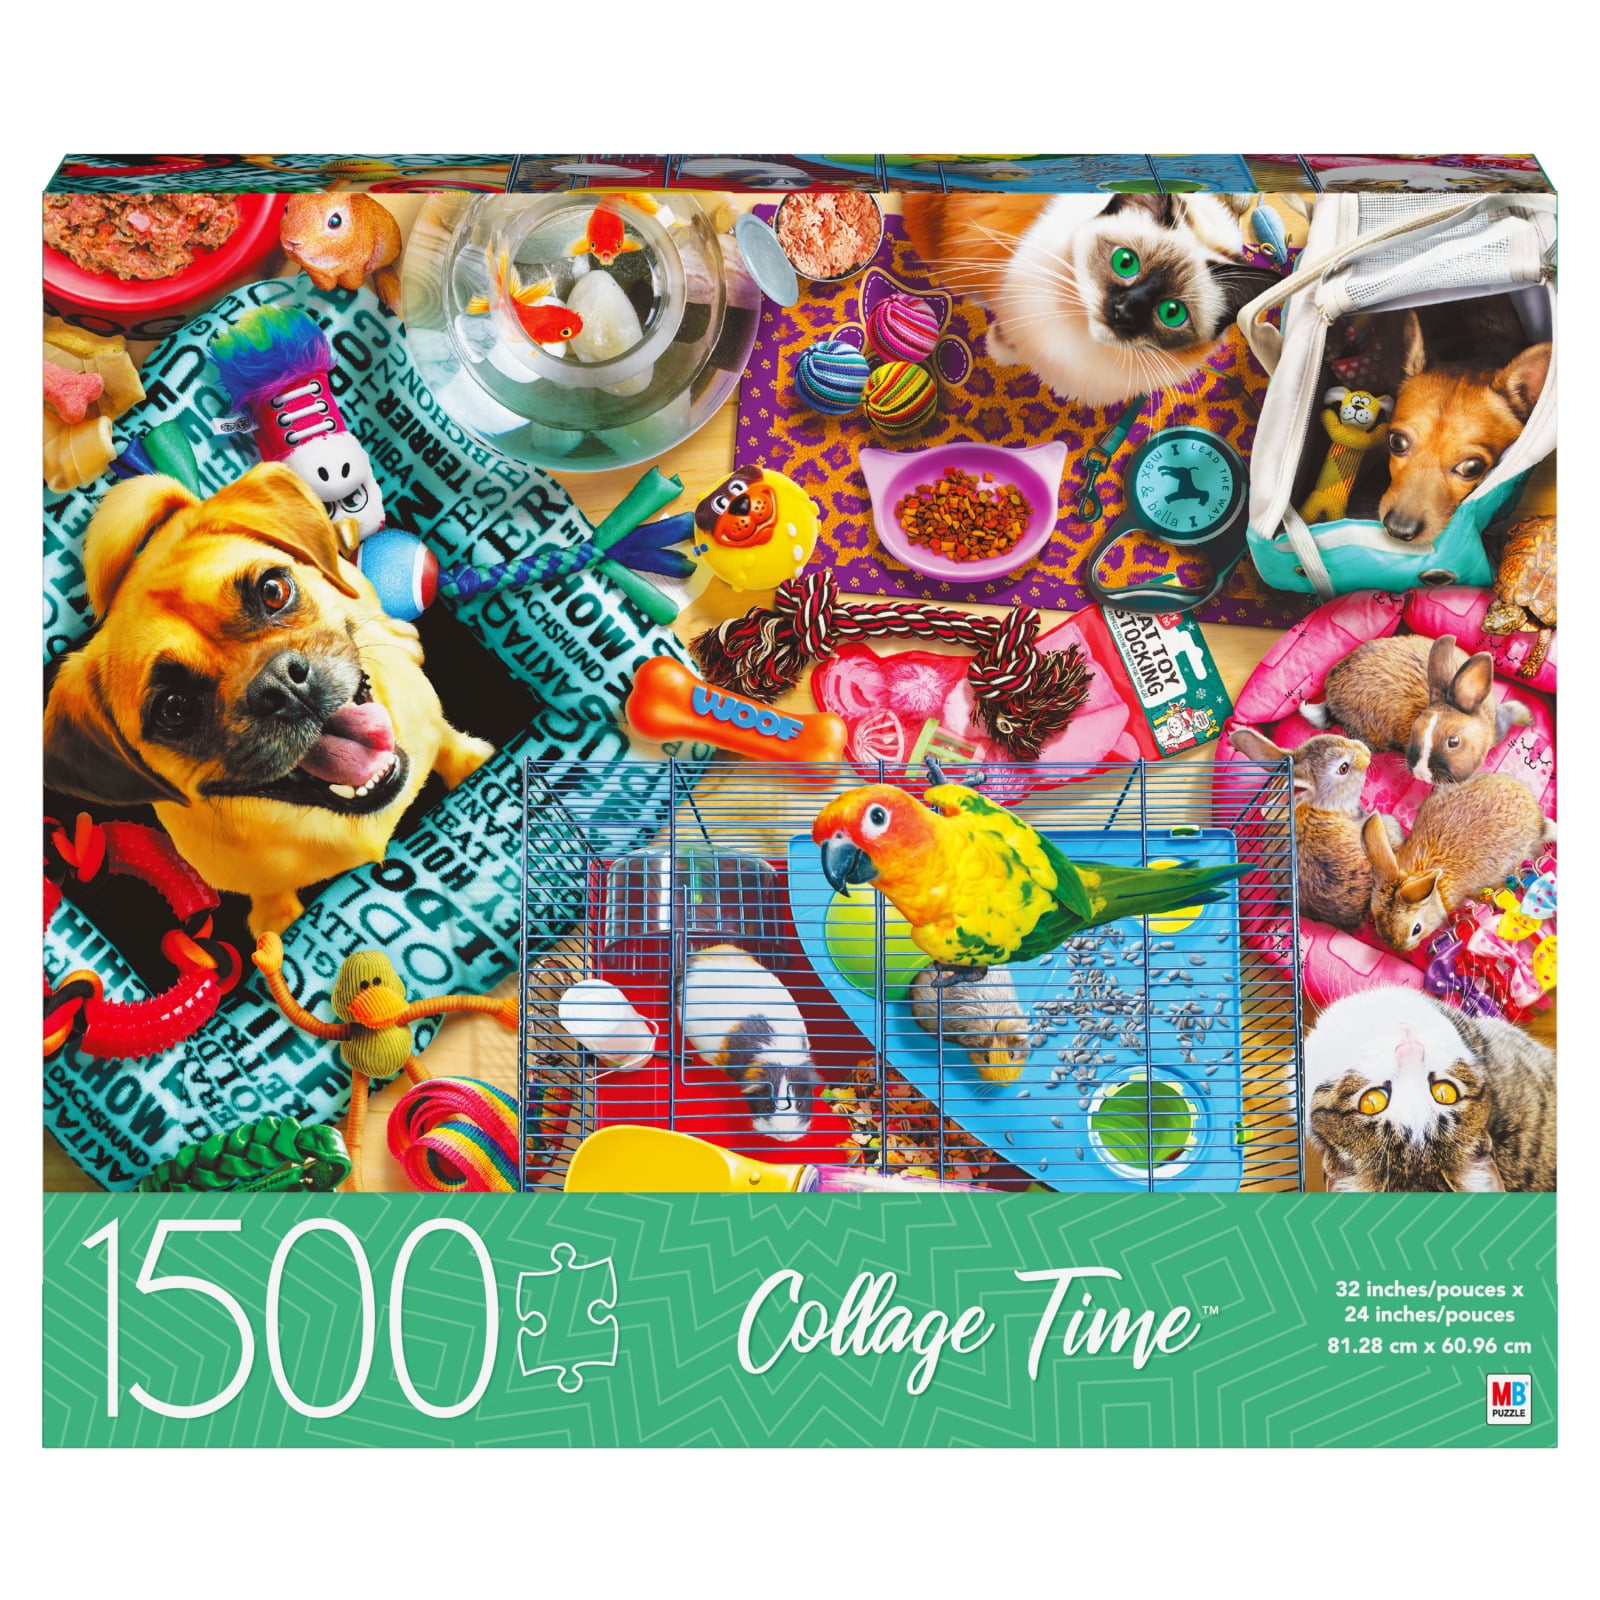 Night Celebration Mark Ludy Jigsaw Puzzle 1500 Pcs Ceaco for sale online 